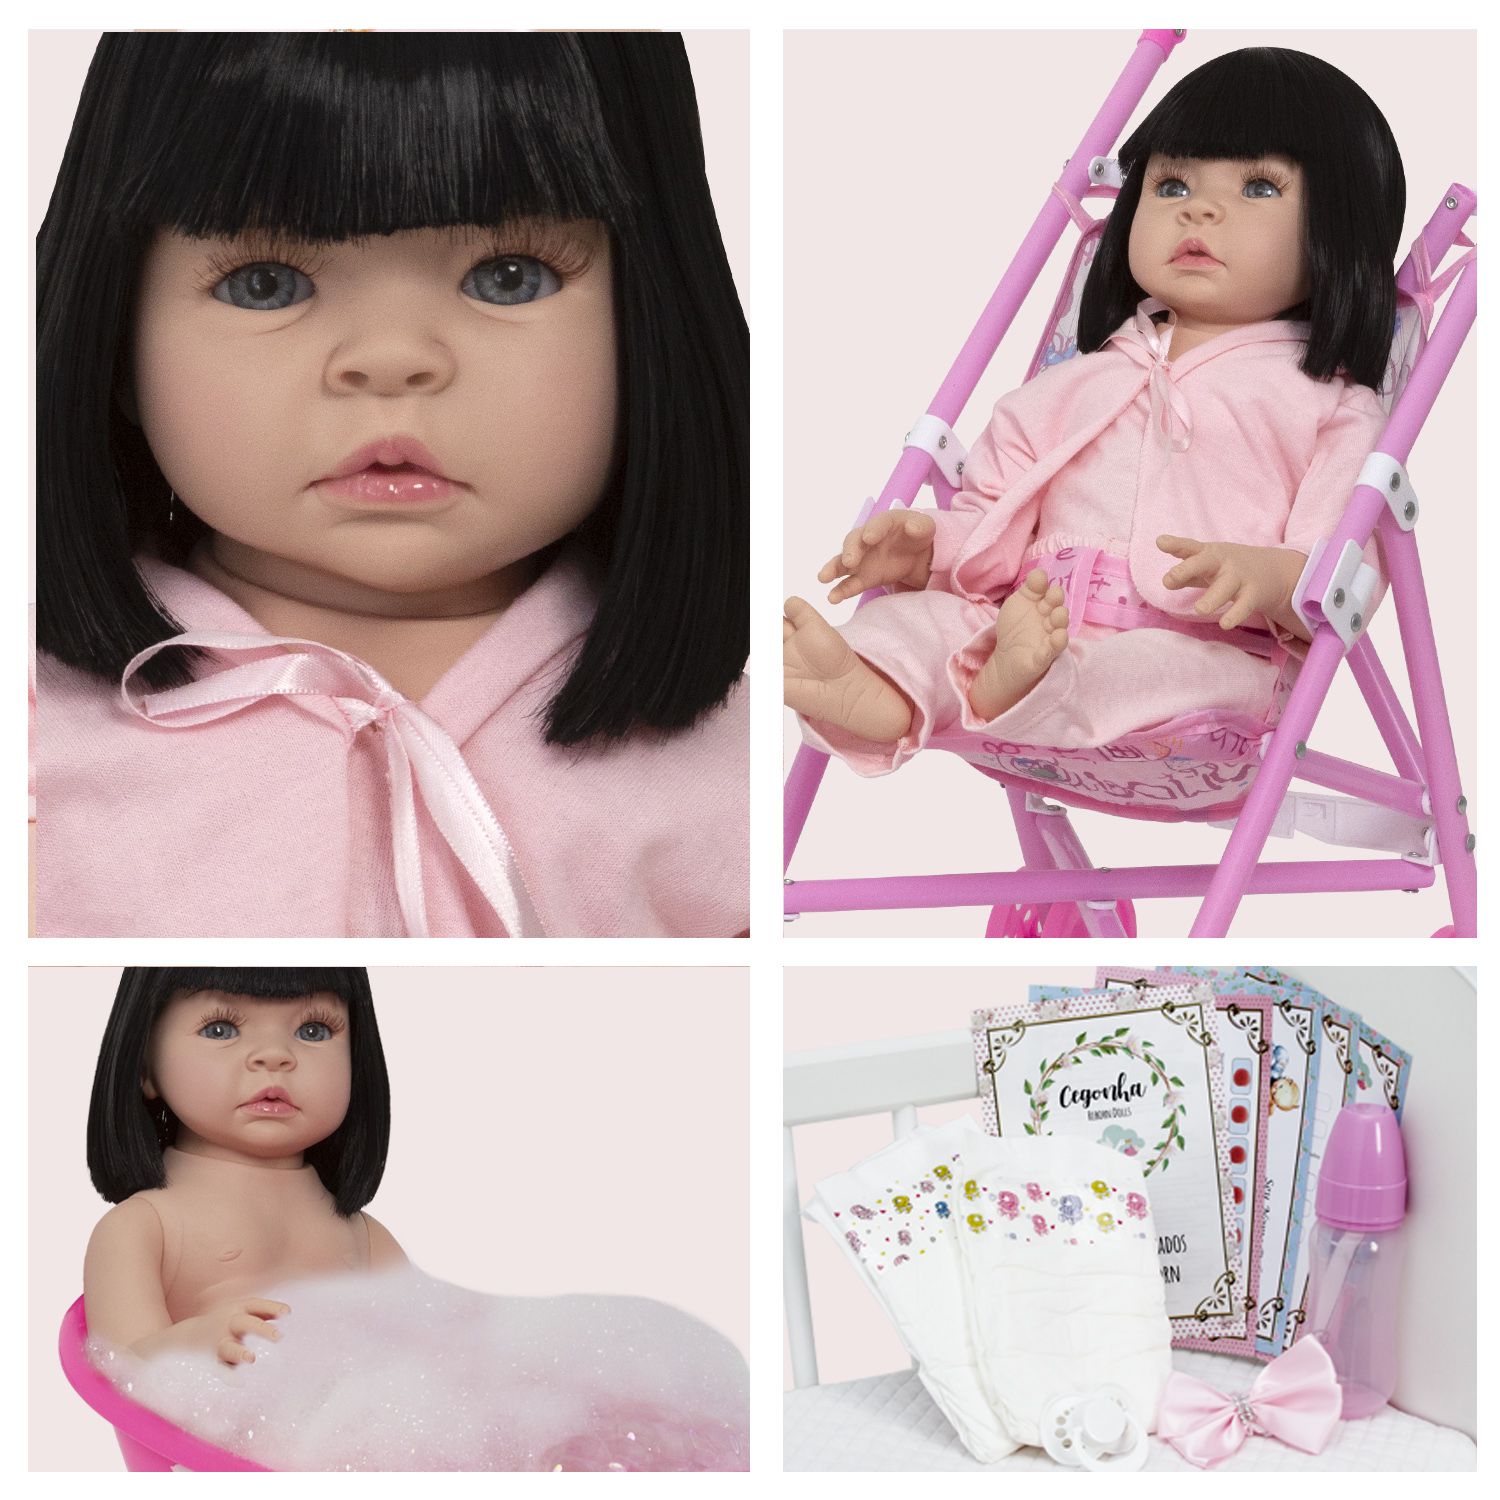 Boneca Bebe Barata Reborn Morena Baby Dolls Super Linda Rosa - Chic Outlet  - Economize com estilo!